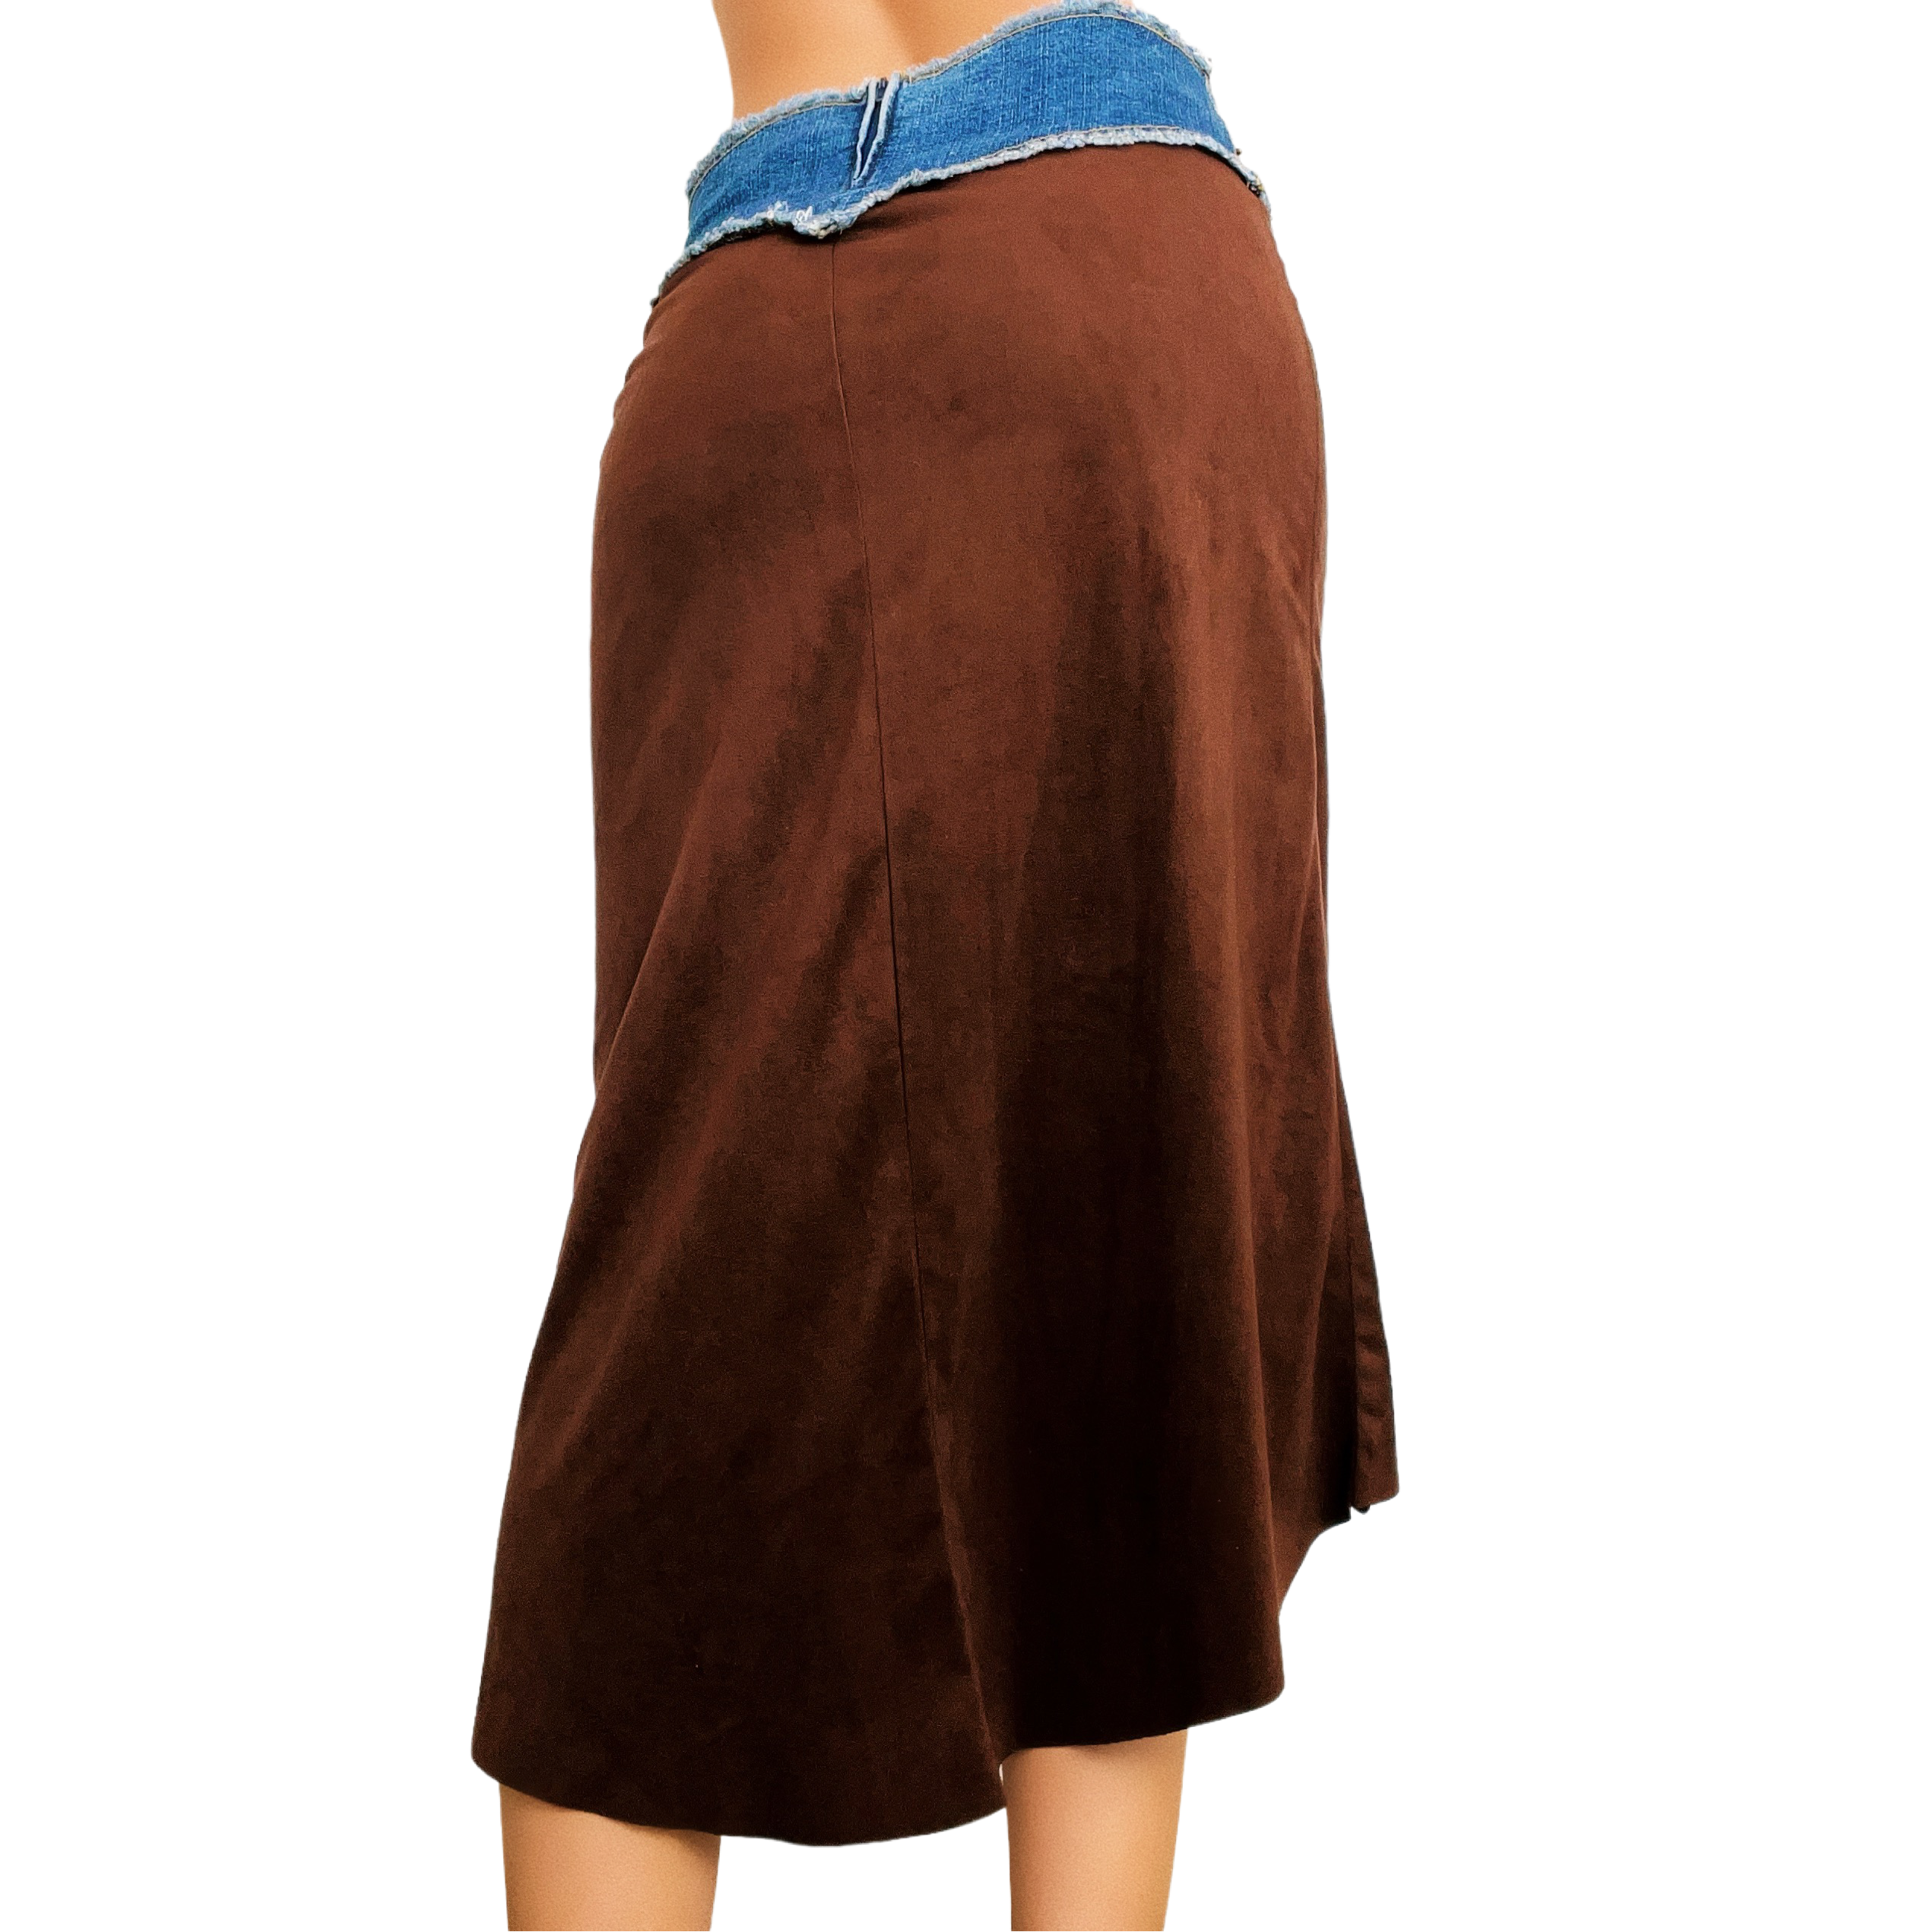 90s Denim & Faux Suede Midi Skirt (XS)